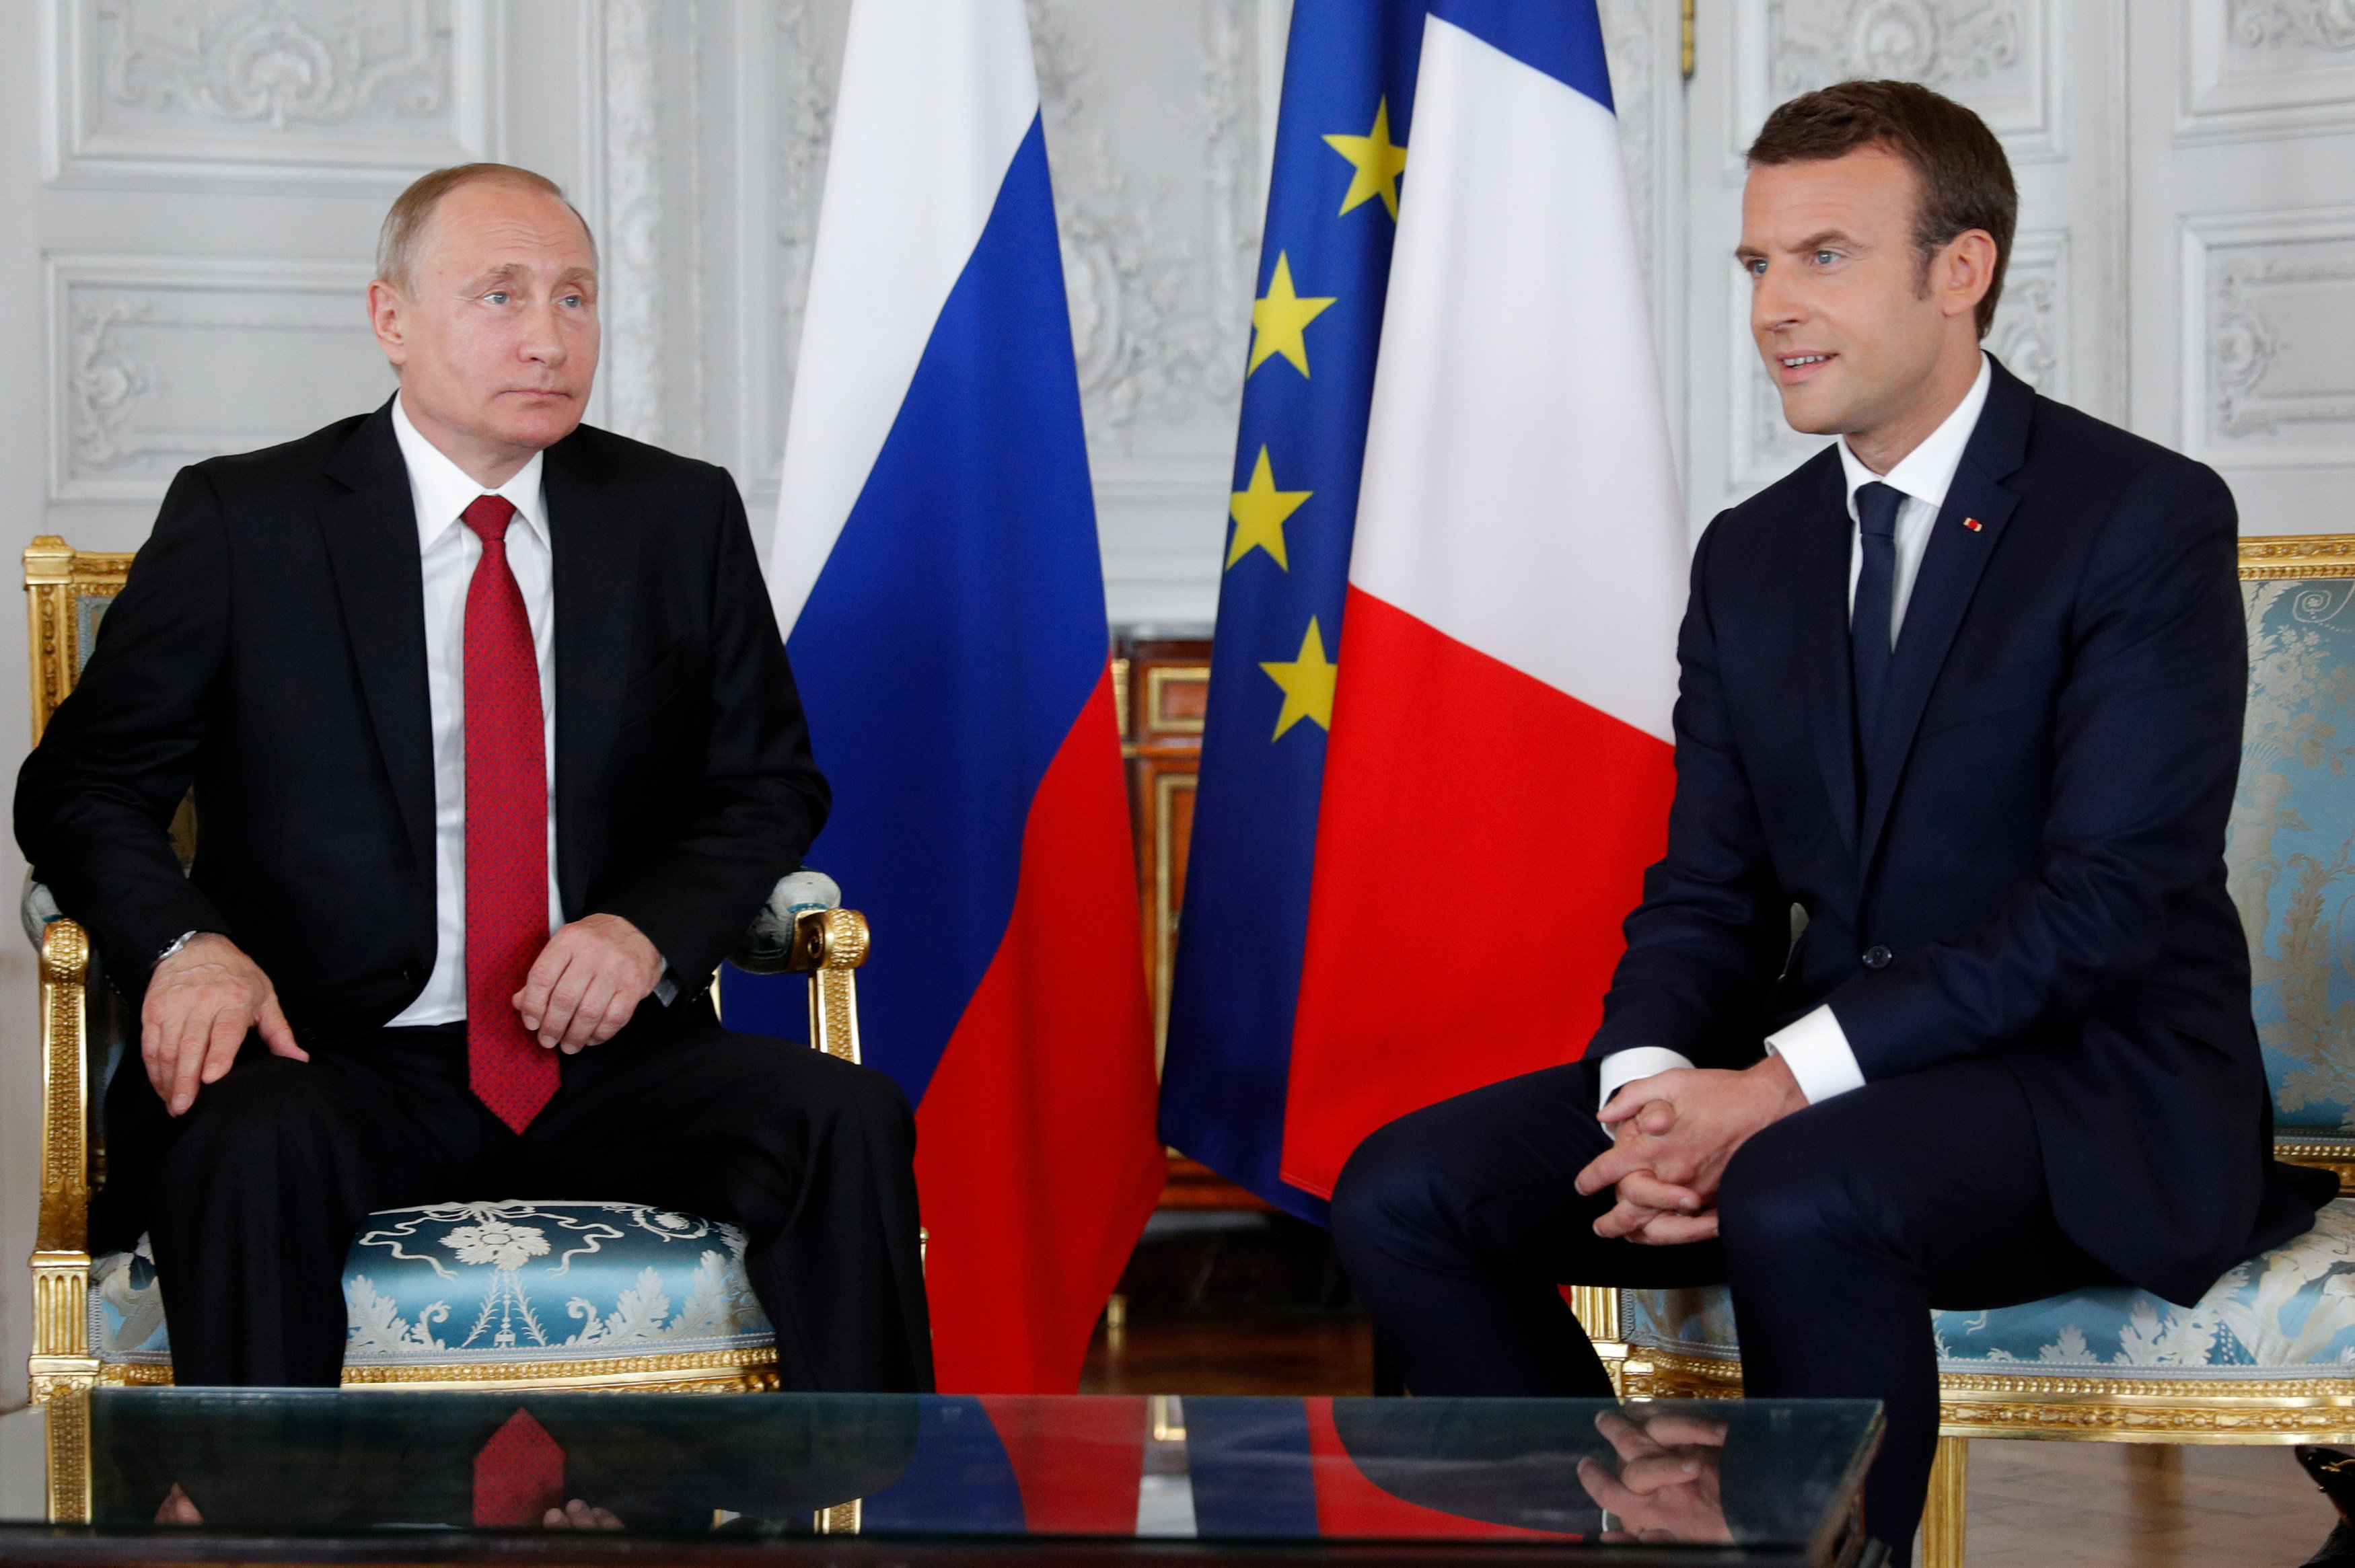 Macron, alongside Putin, denounces two Russian media for election meddling